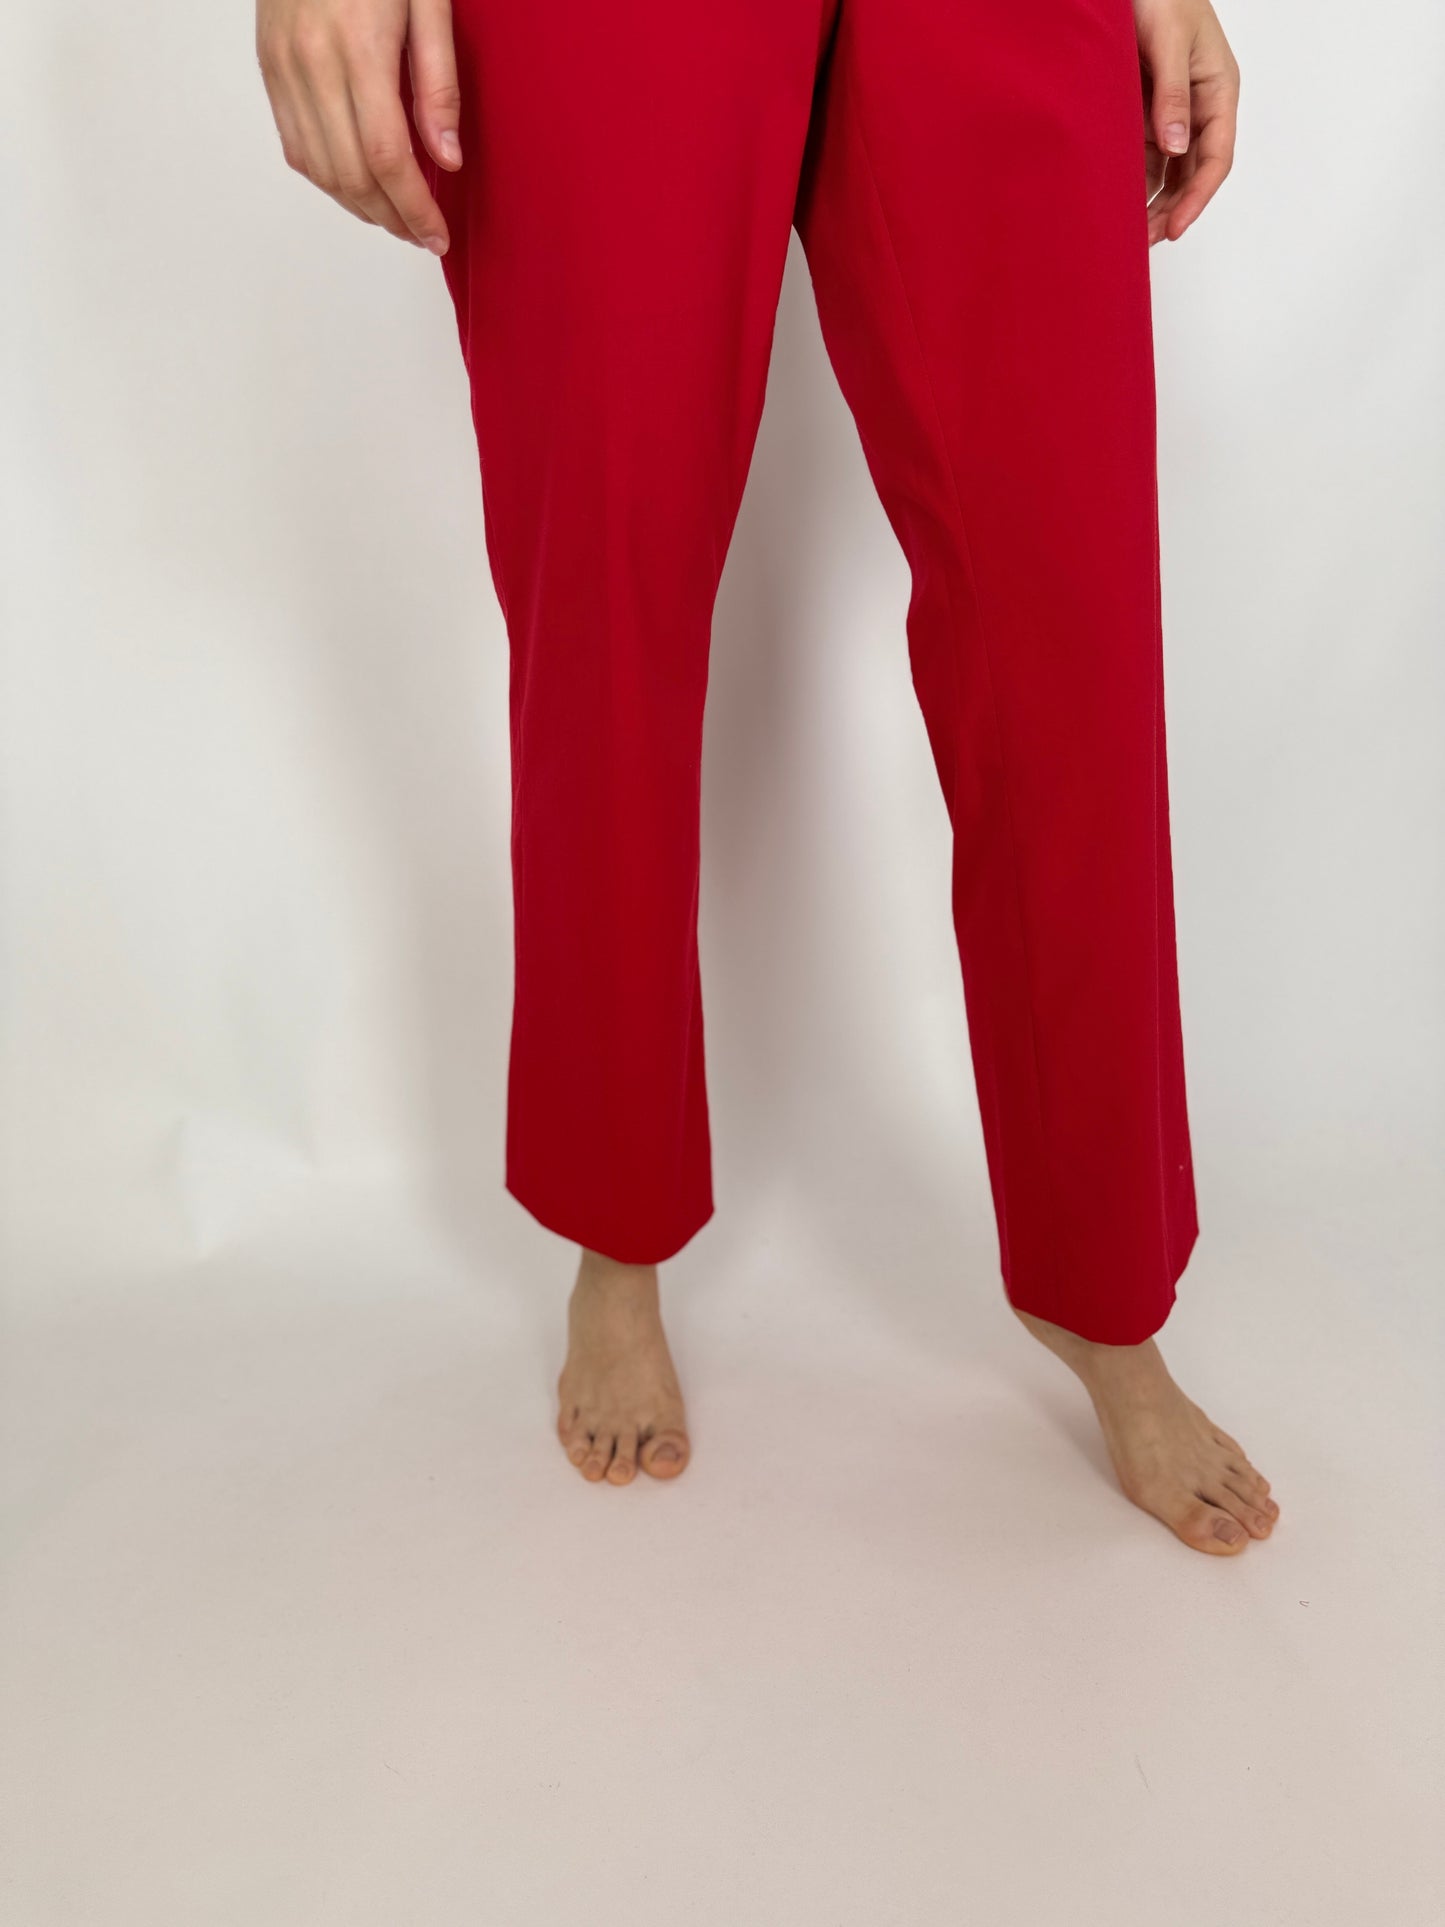 Pantaloni roșii ușor strech și evazați